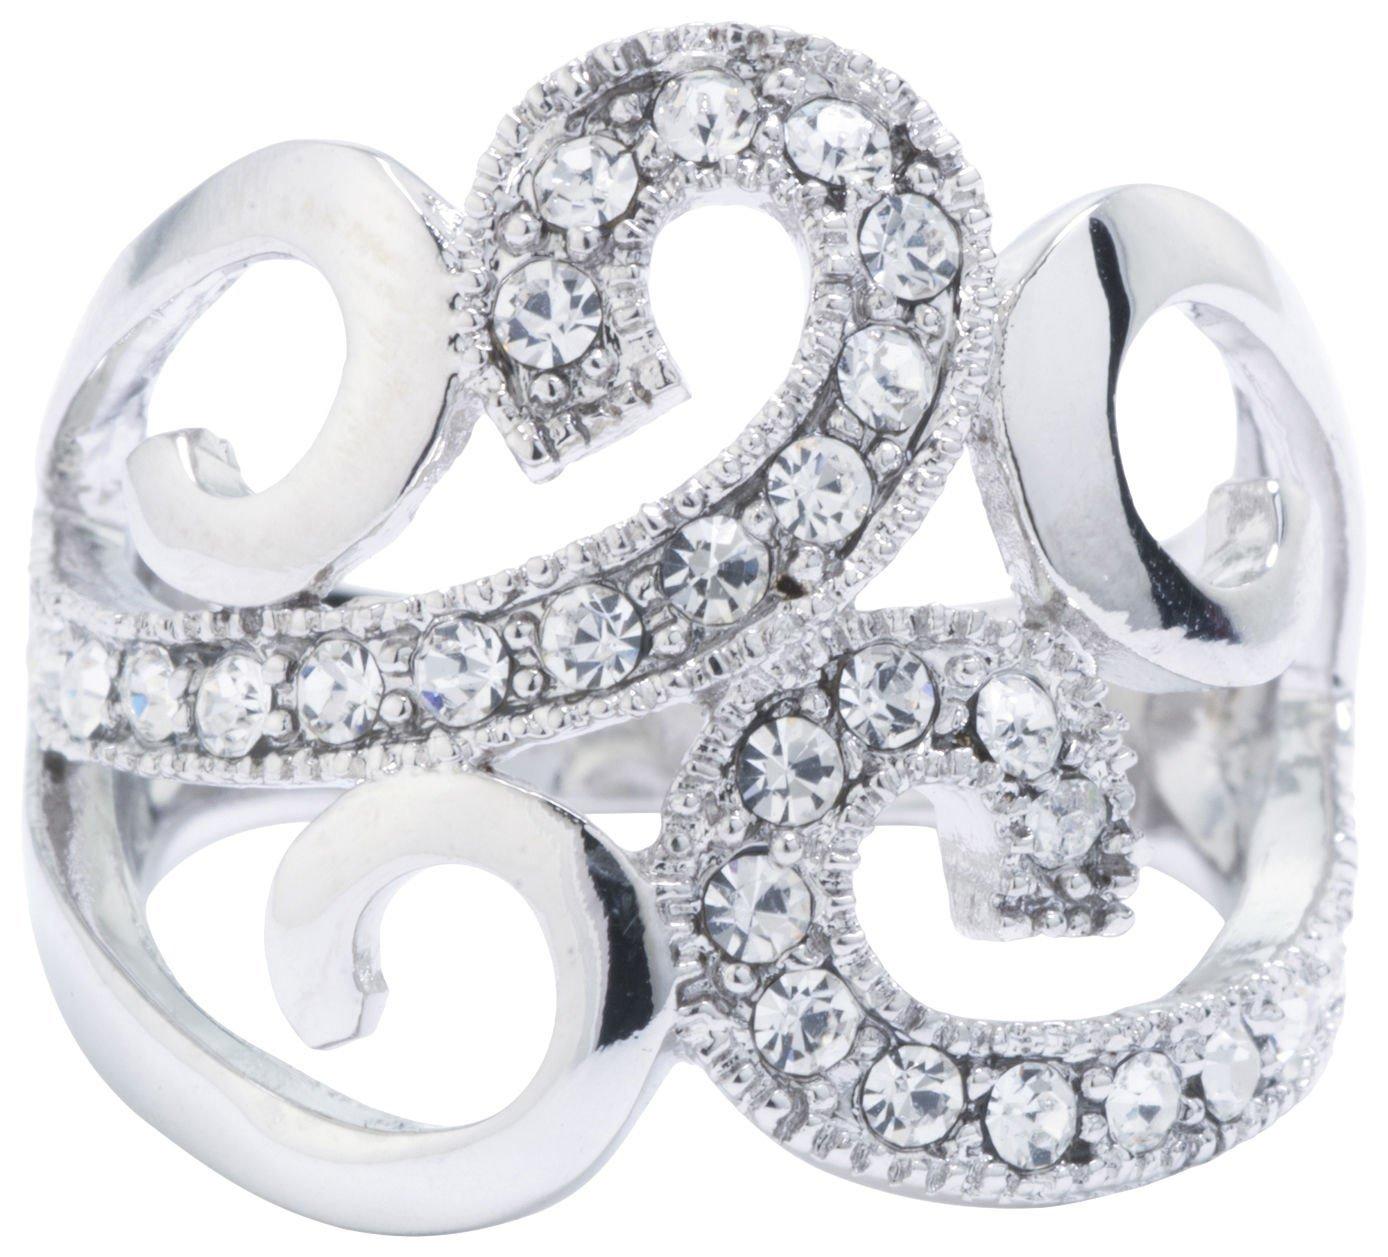 Ocean Treasures Silver Tone Cubic Zirconia Swirl Ring